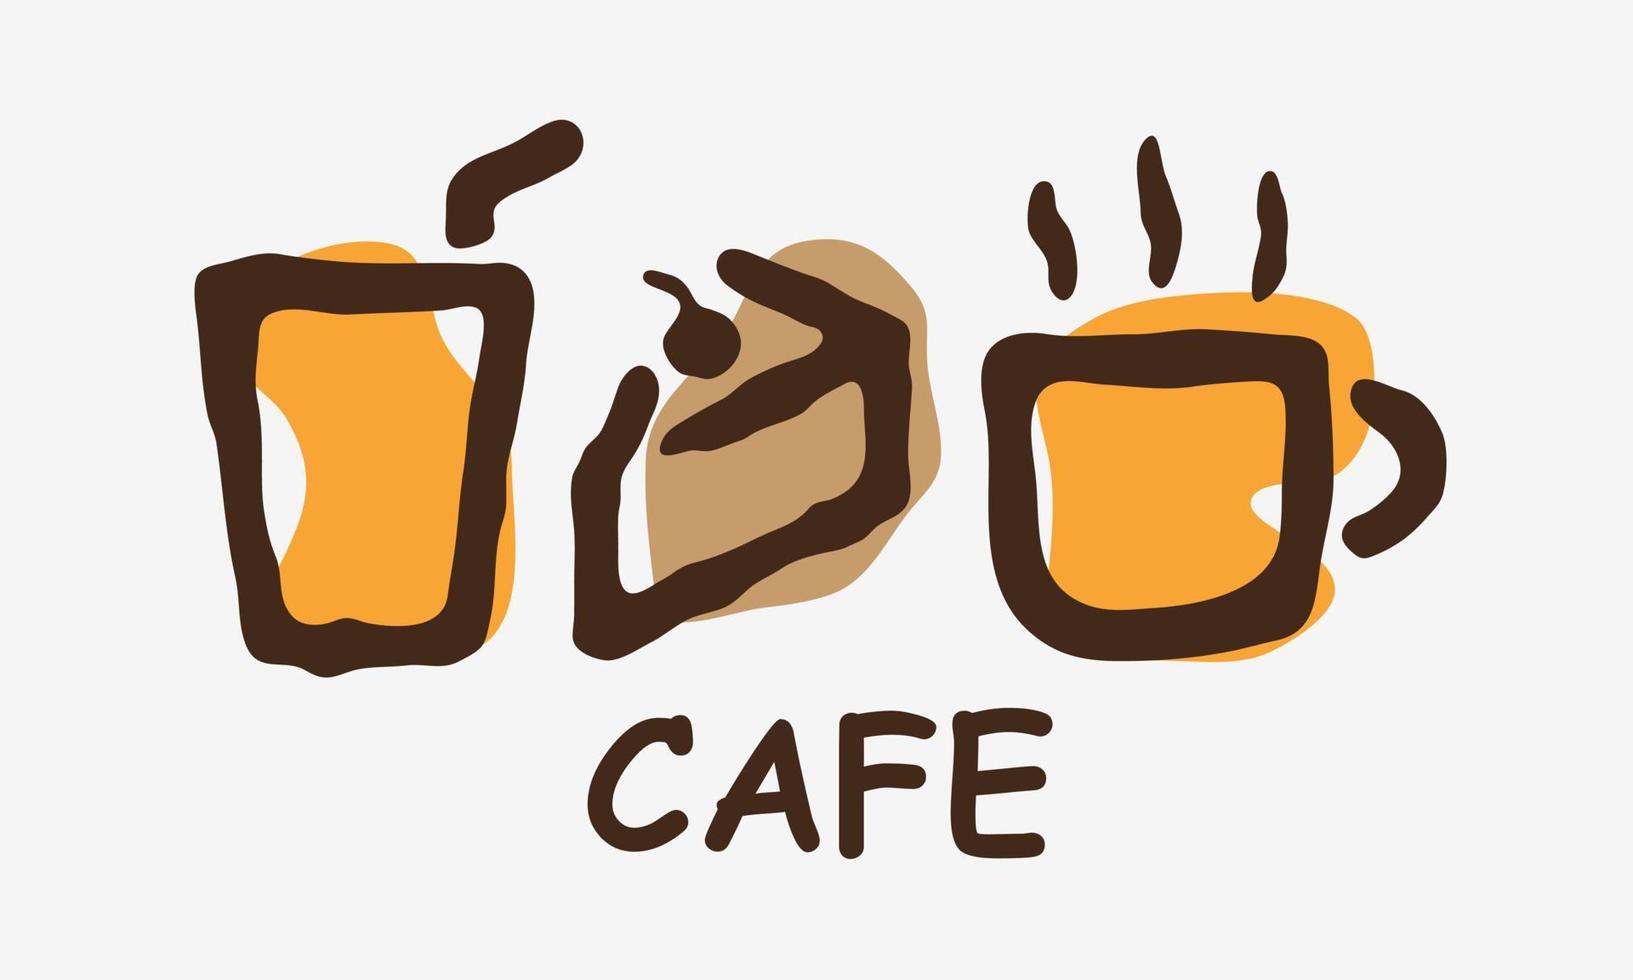 Cafe bakery vector element logo